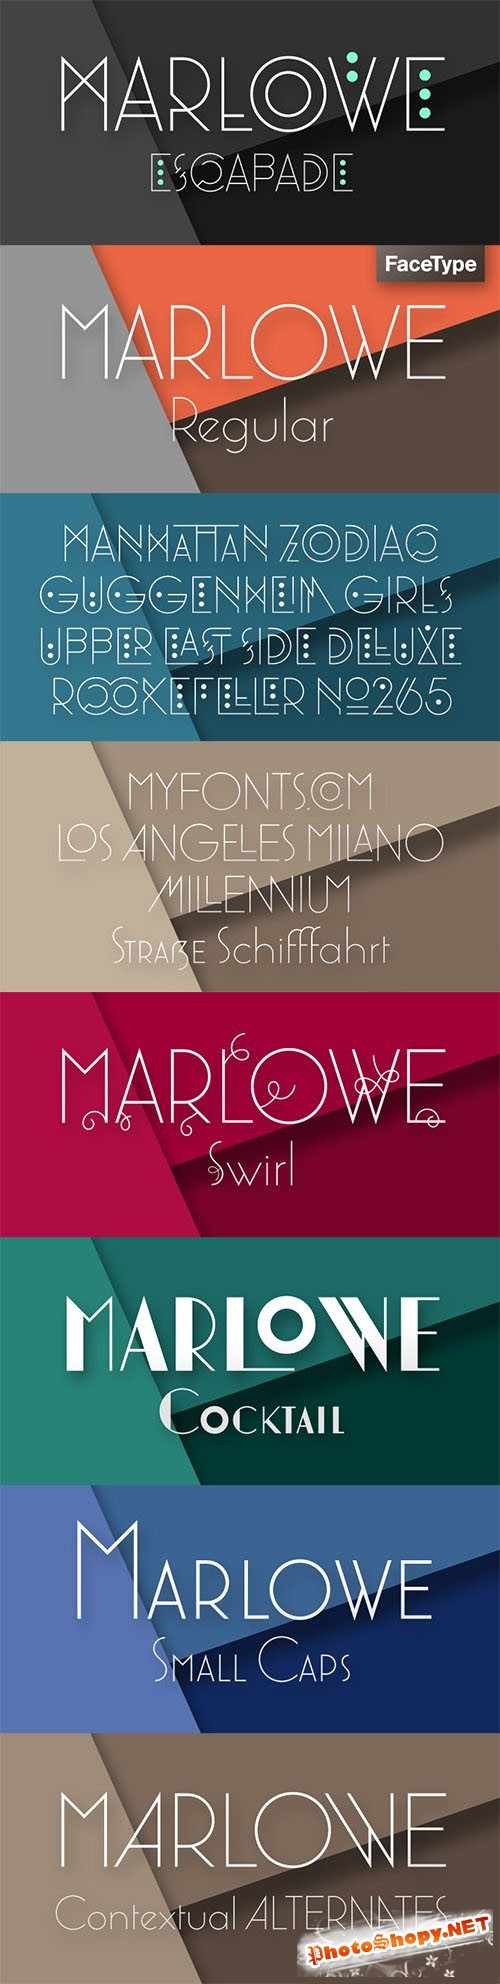 Marlowe Font Family